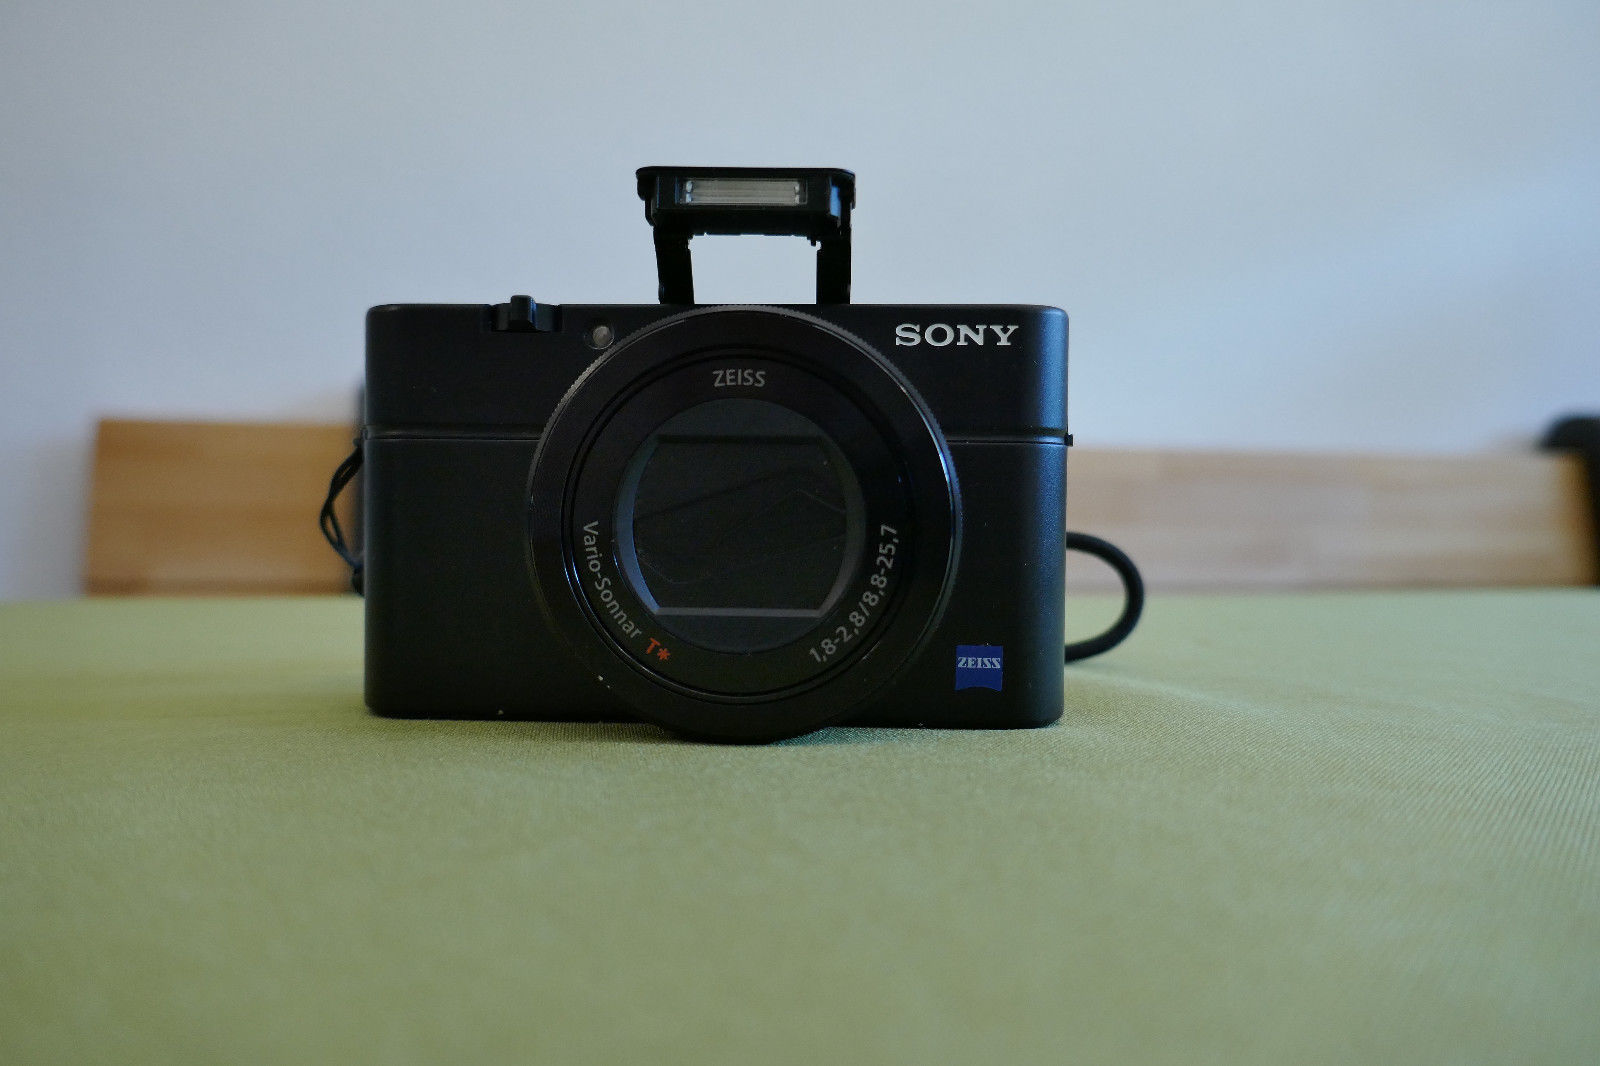 SONY RX100 III M3 Kompaktkamera m. ZEISS Objektiv / guter Zustand mit OVP